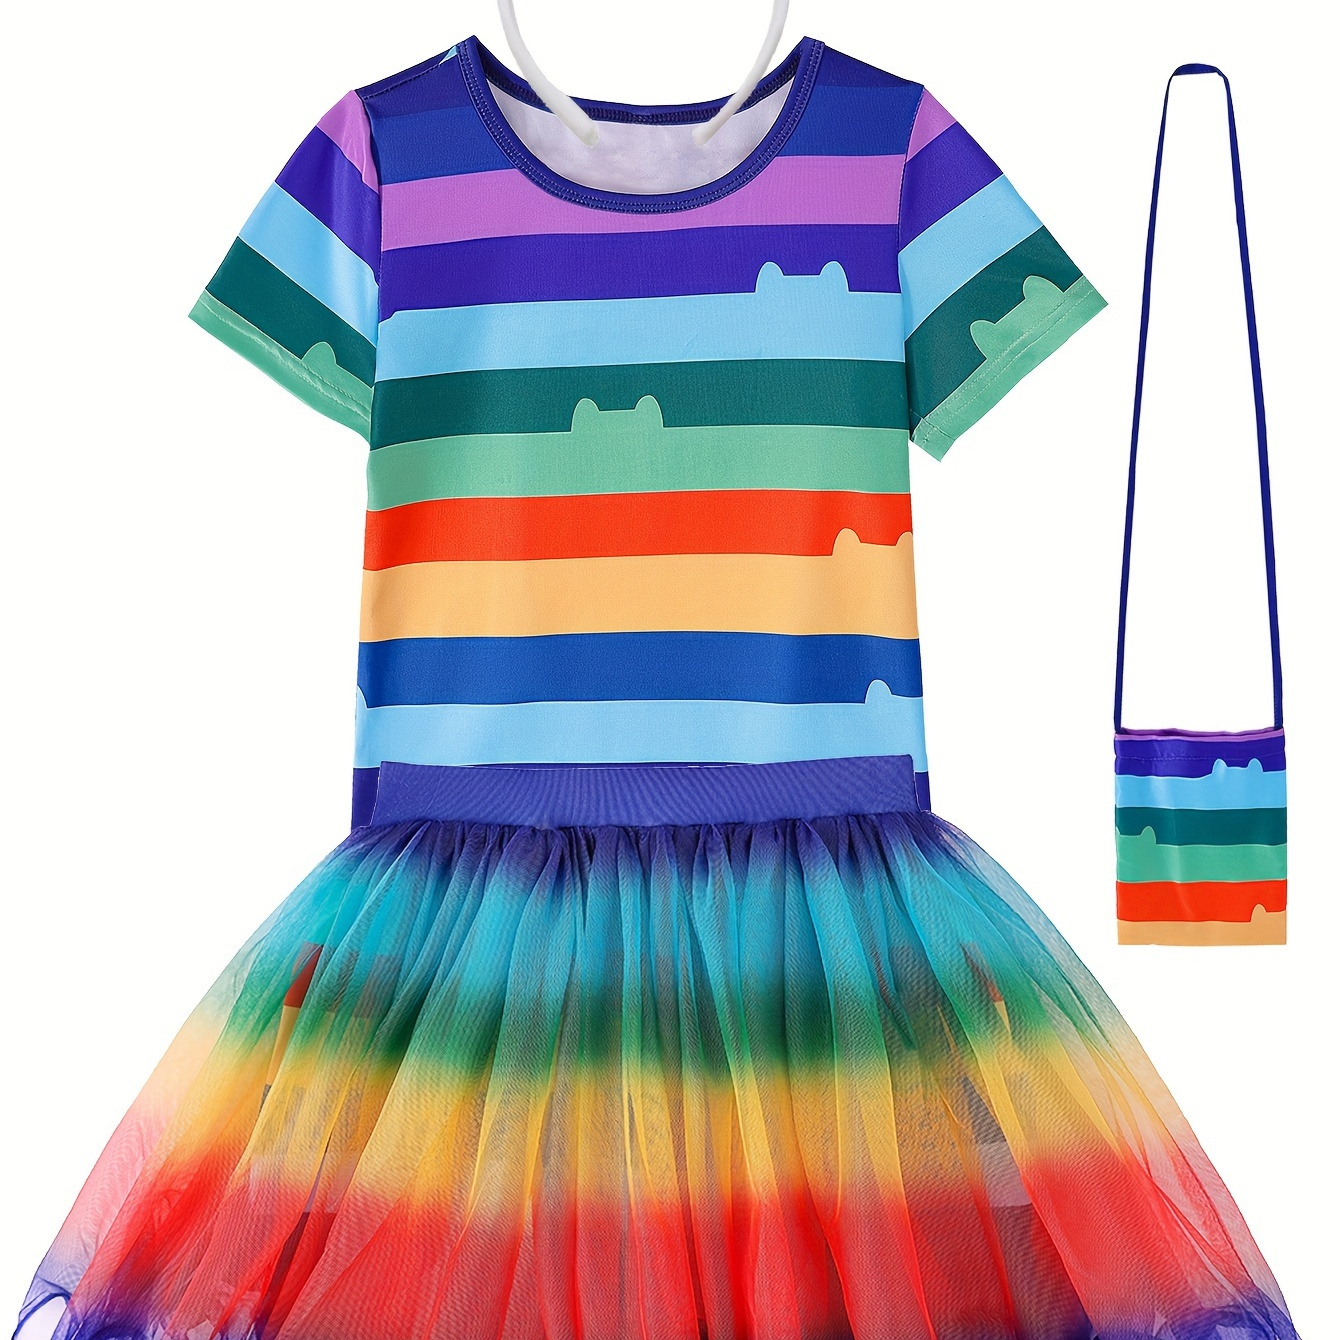 

Girls 4pcs Rainbow Stripped Outfits, T-shirt + Tutu Skirt (random Color) + Bag + Car Ears Headband Set For Carnival Party Gift Mardi Gras